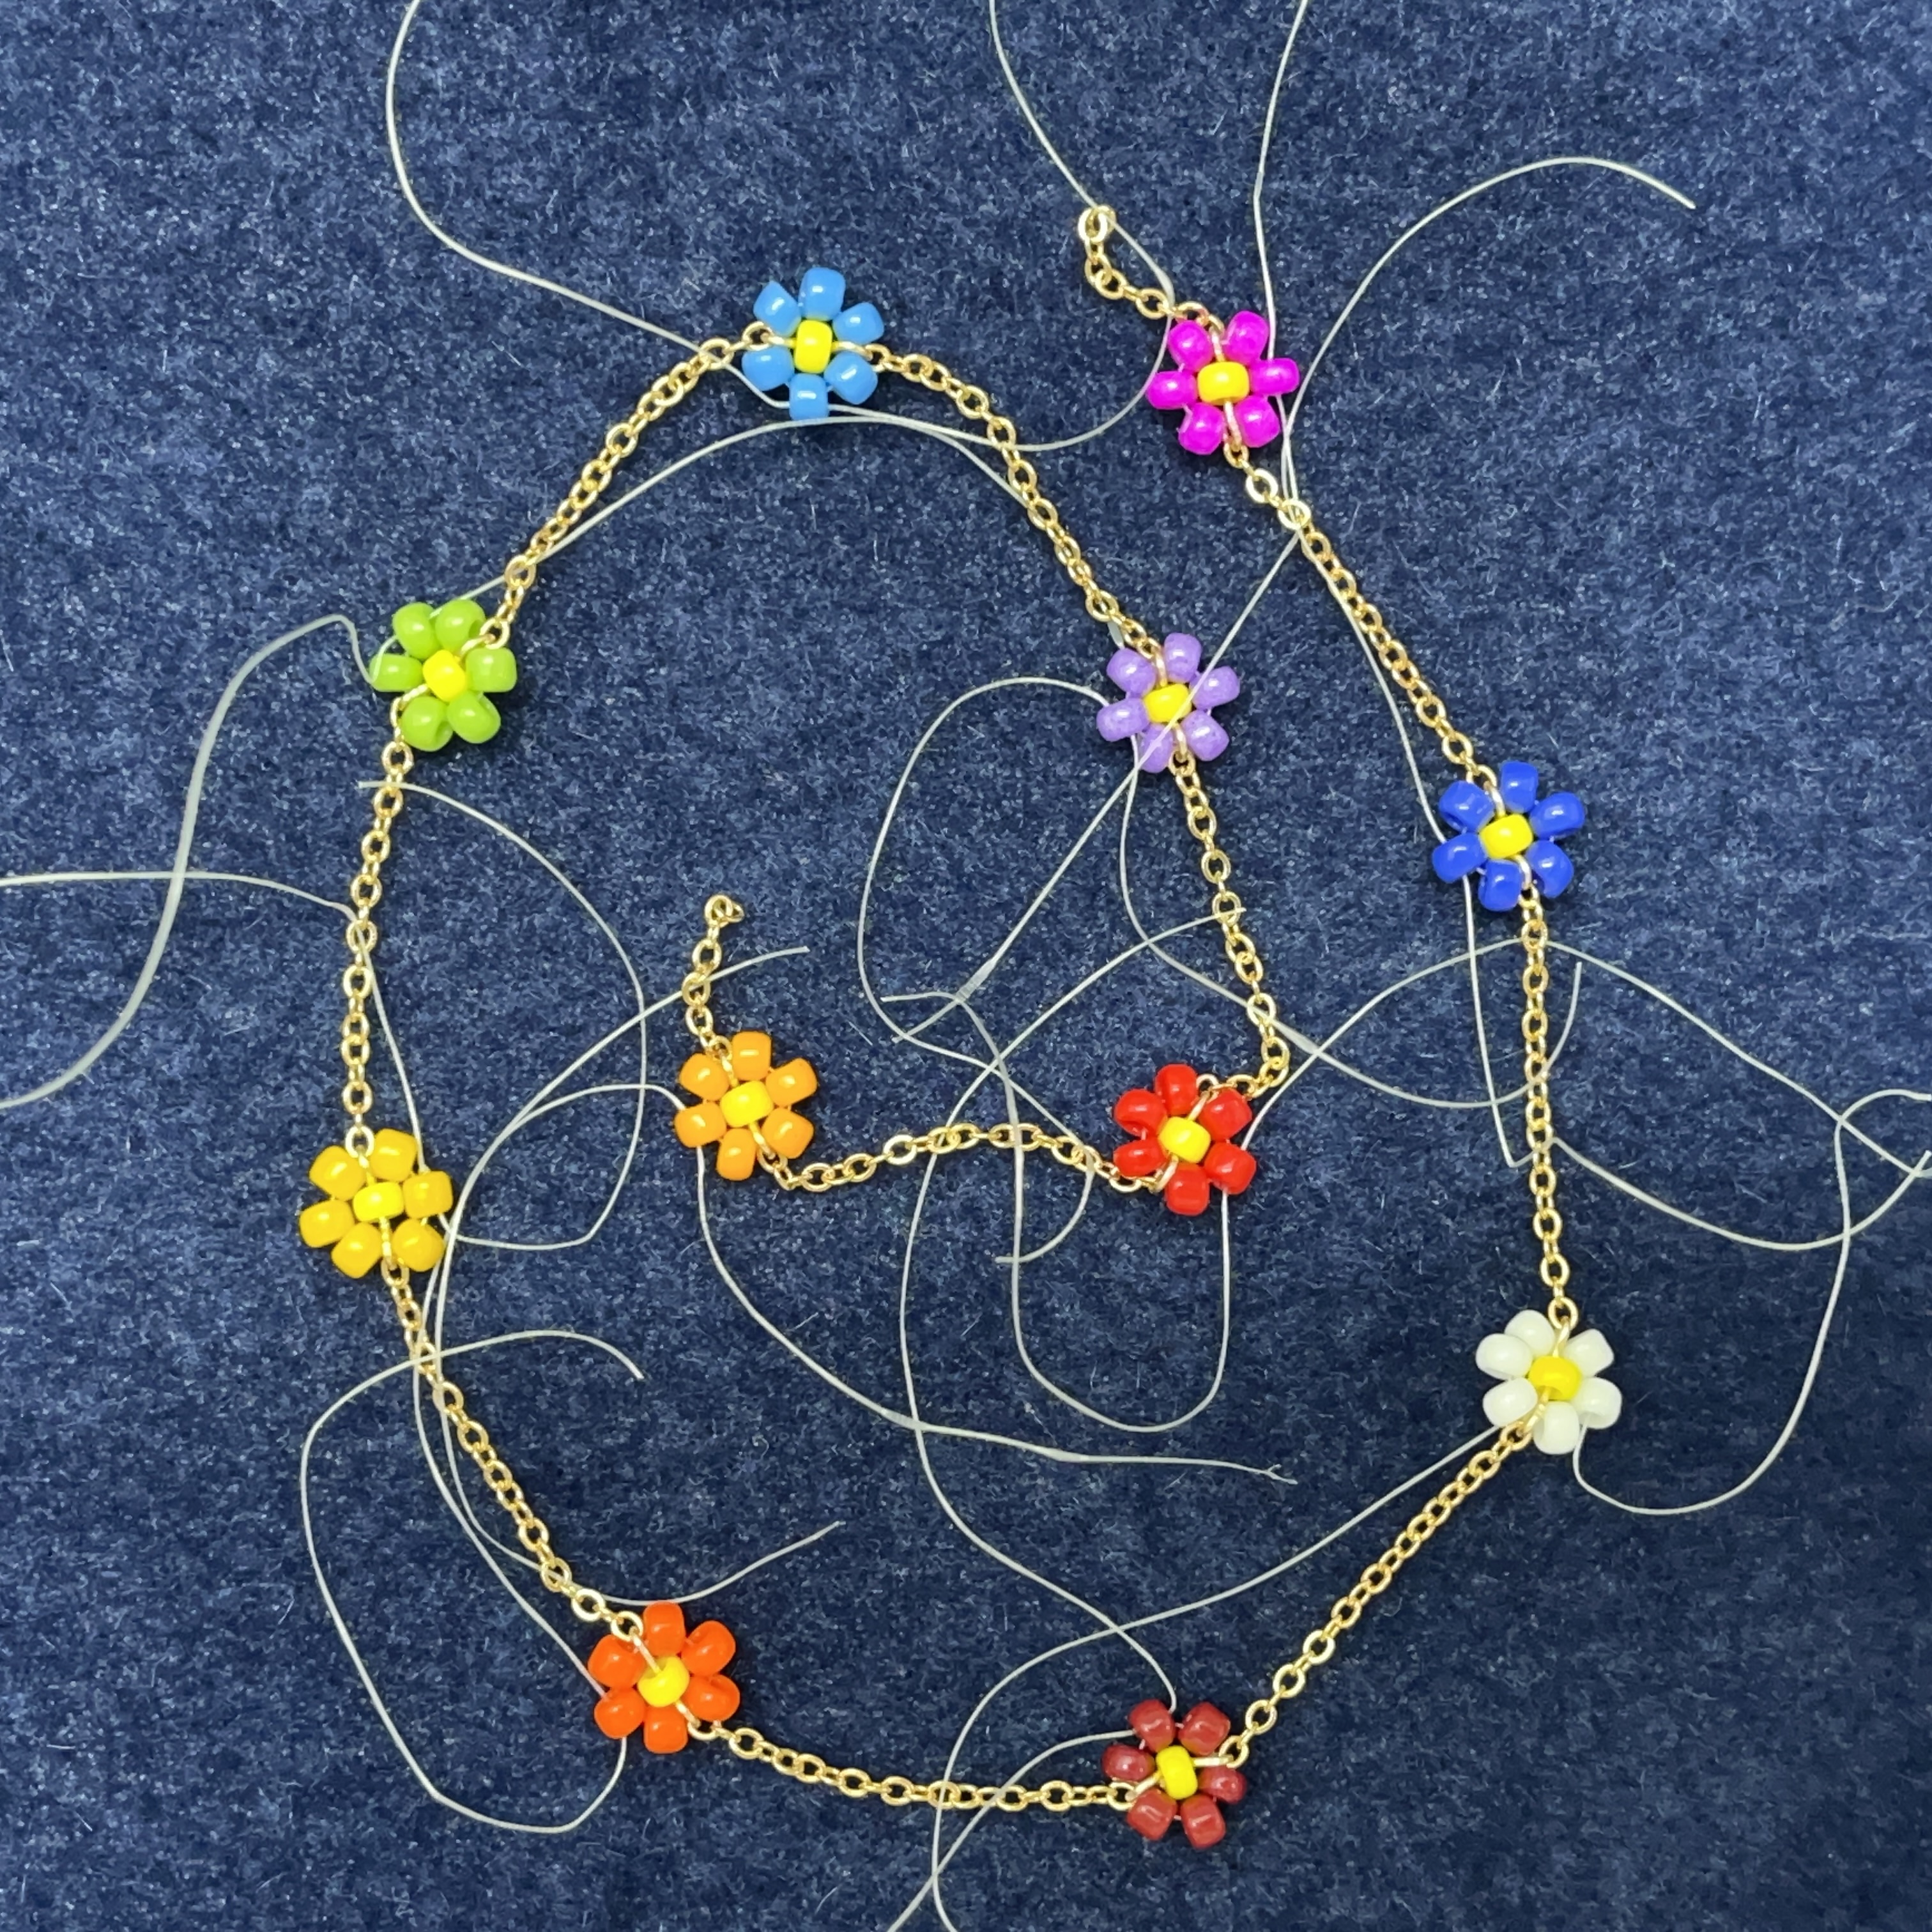 Black Daisy Flowers White Chain Necklace, Bracelet, Ring Seed Beads Choker  | eBay